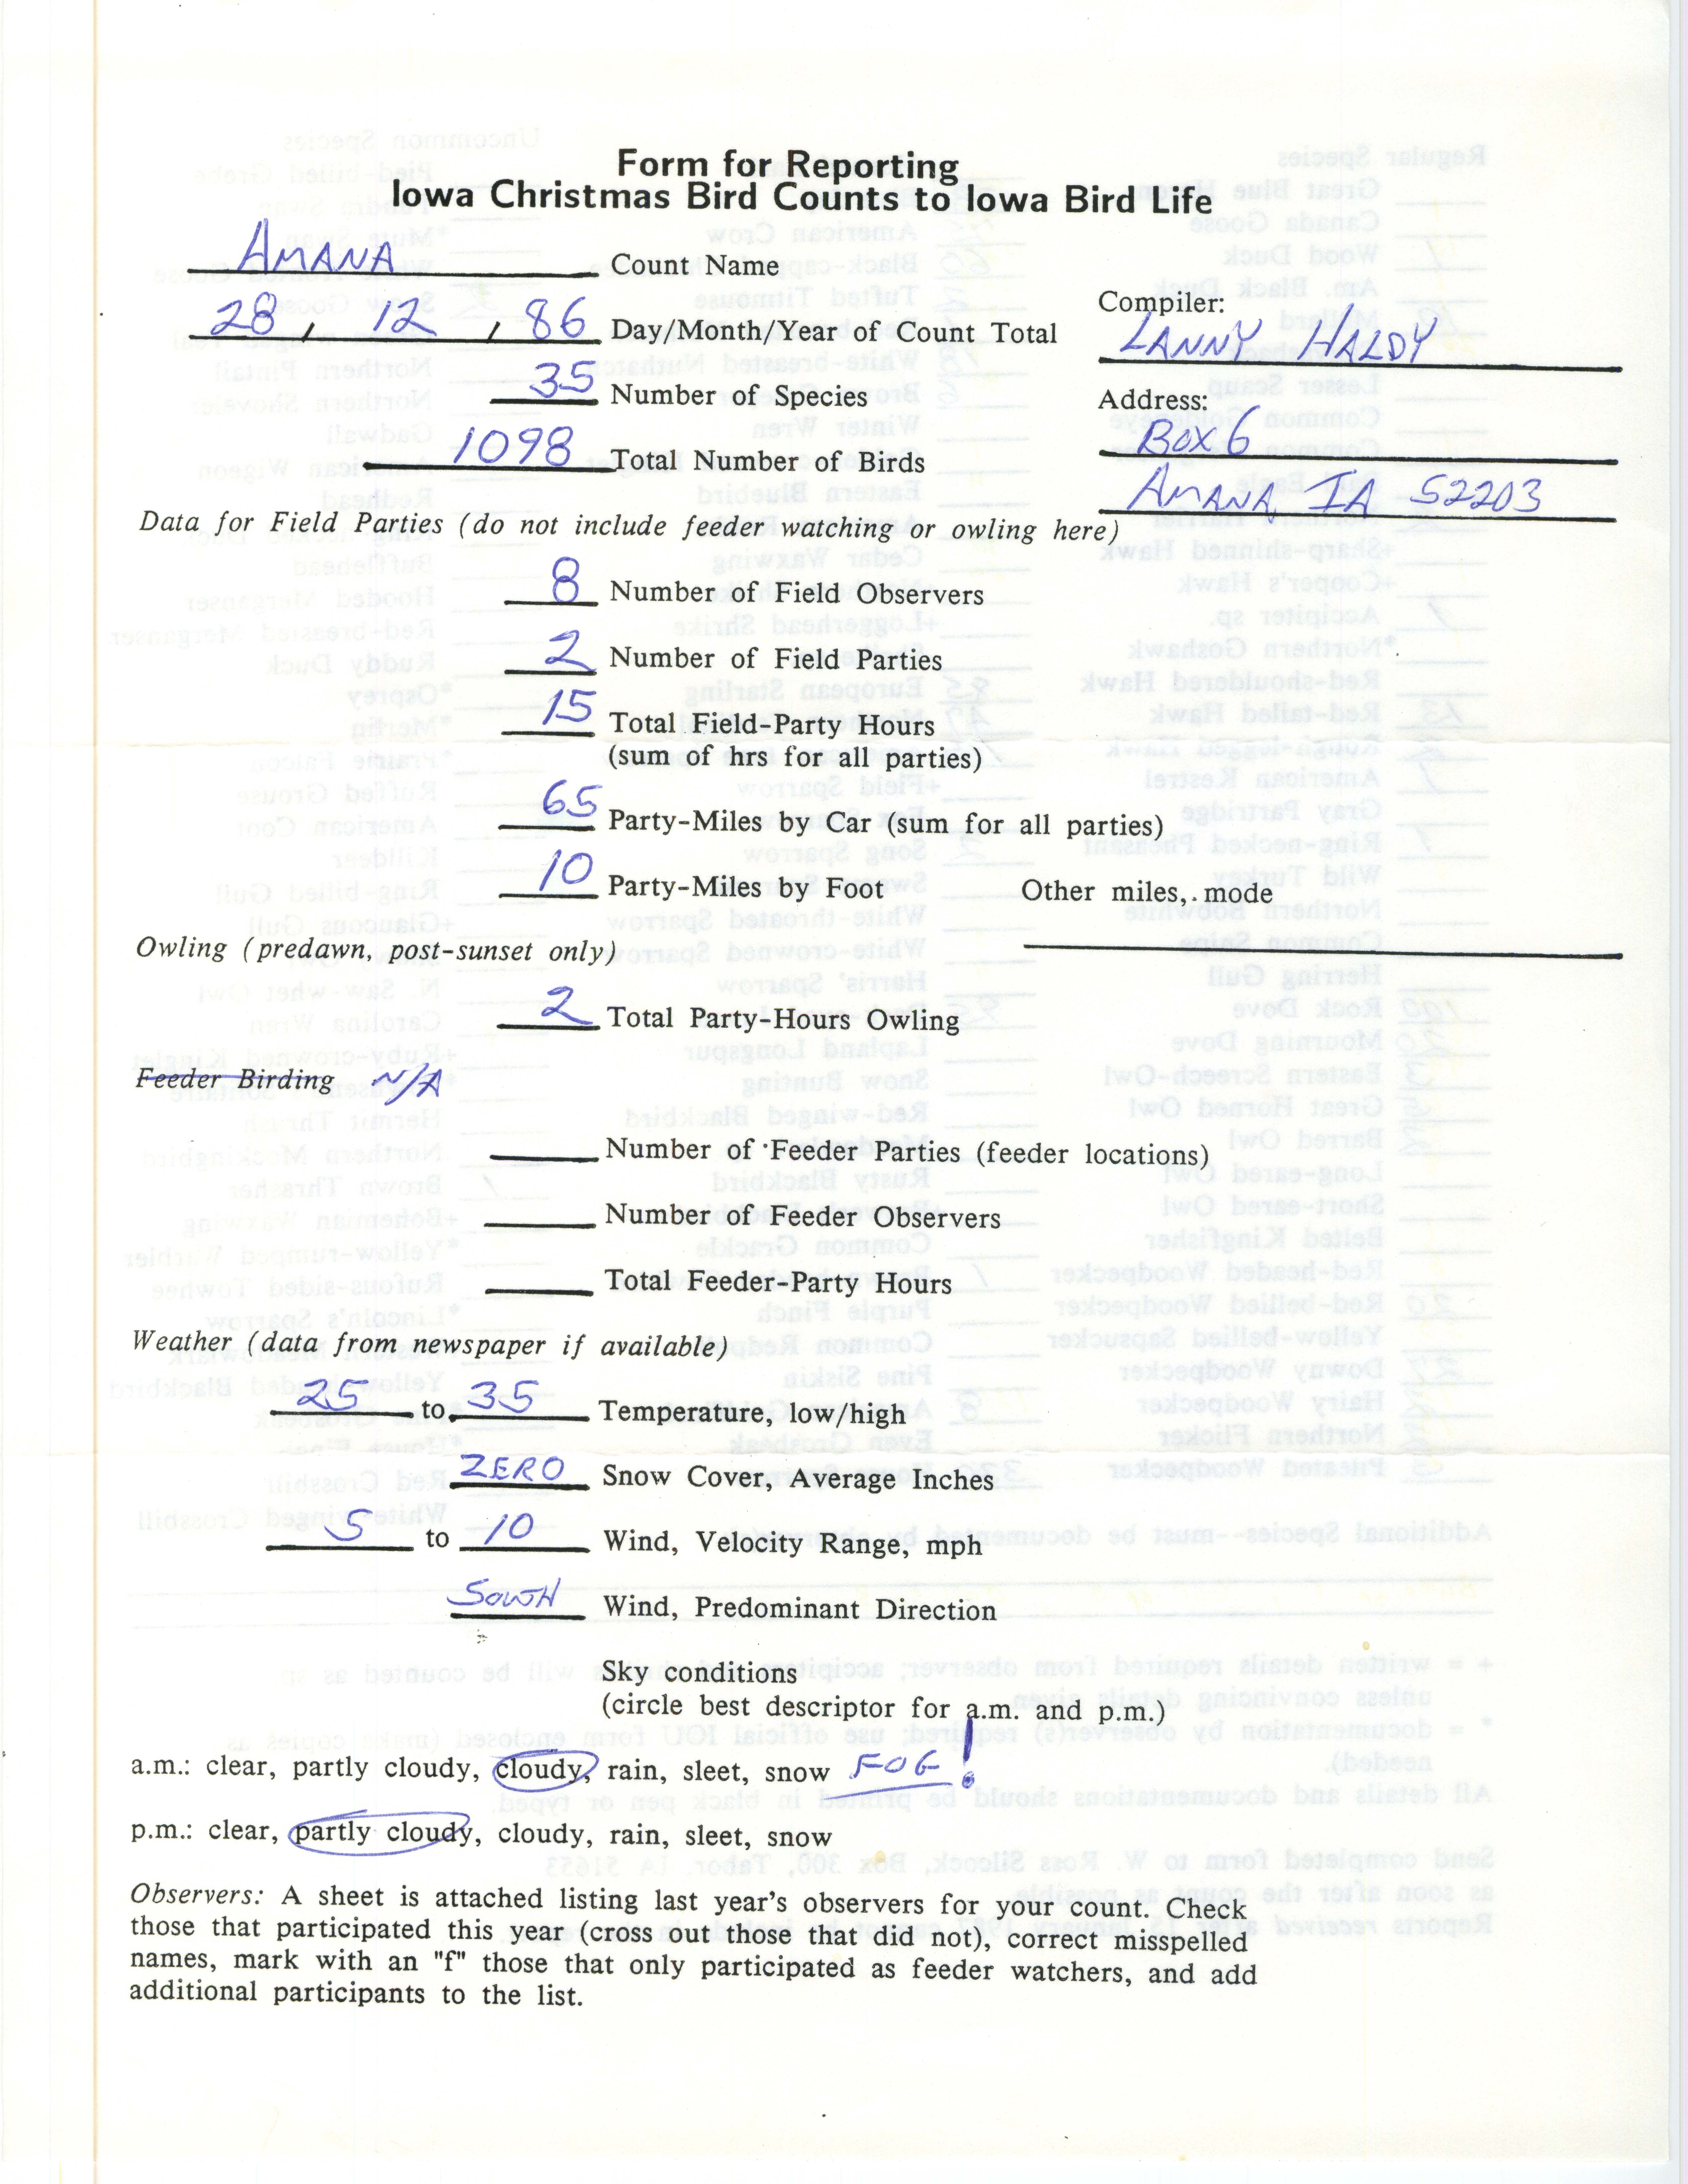 Form for reporting Iowa Christmas bird counts to Iowa Bird Life, Lanny Haldy, December 28, 1986